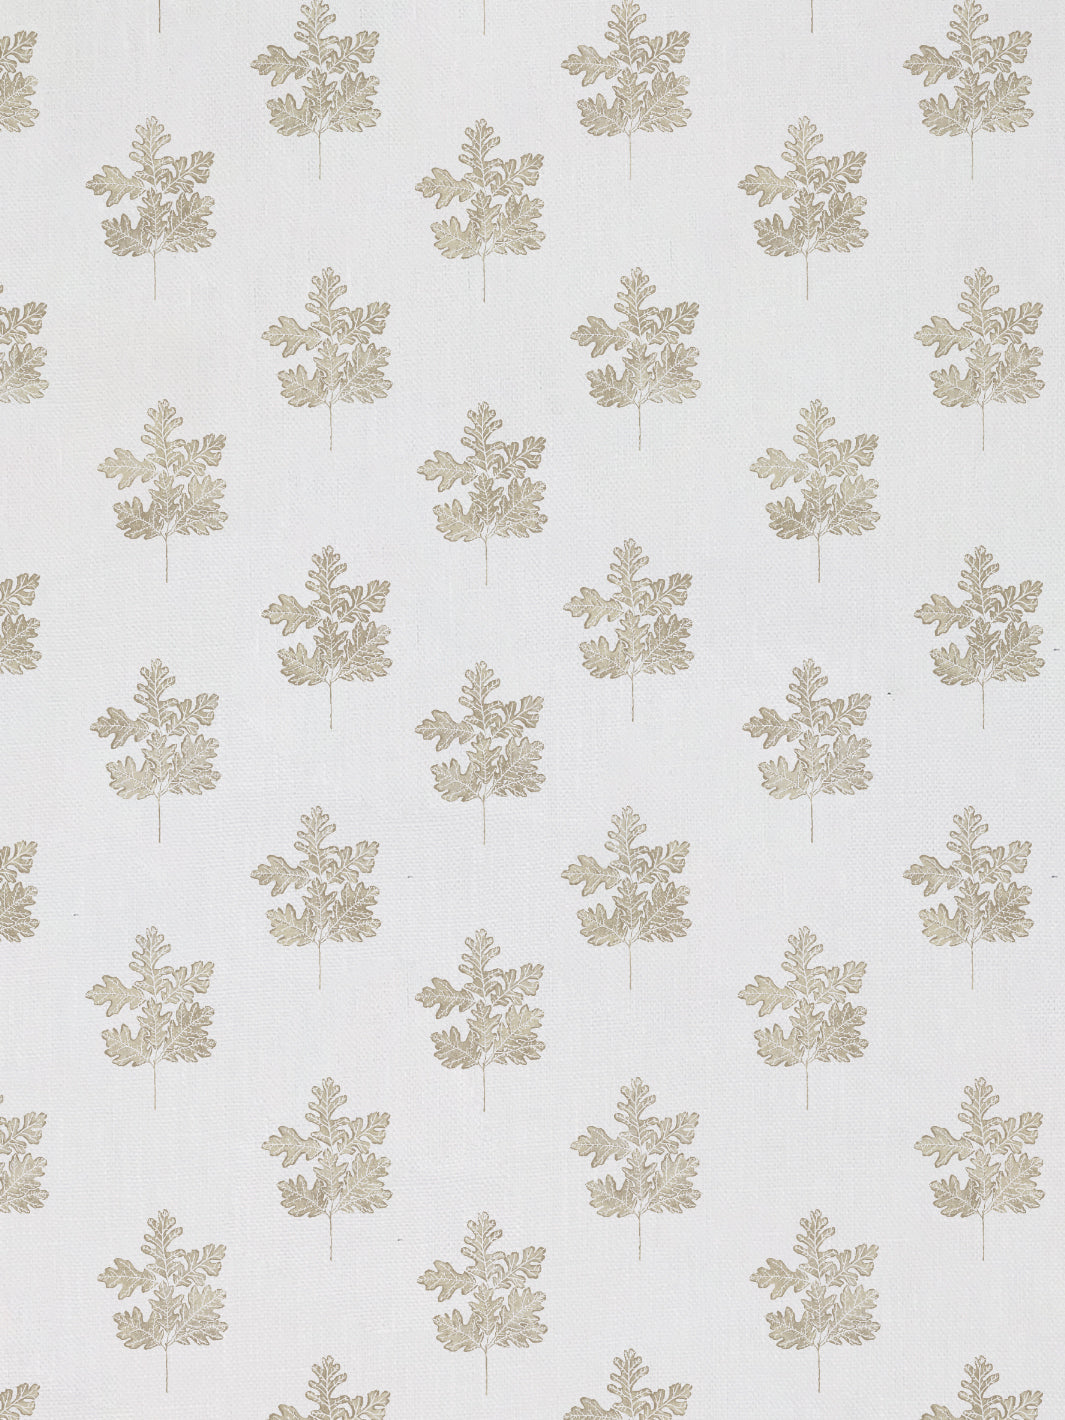 &#39;Valley Oak Leaf&#39; Linen Fabric - Neutral